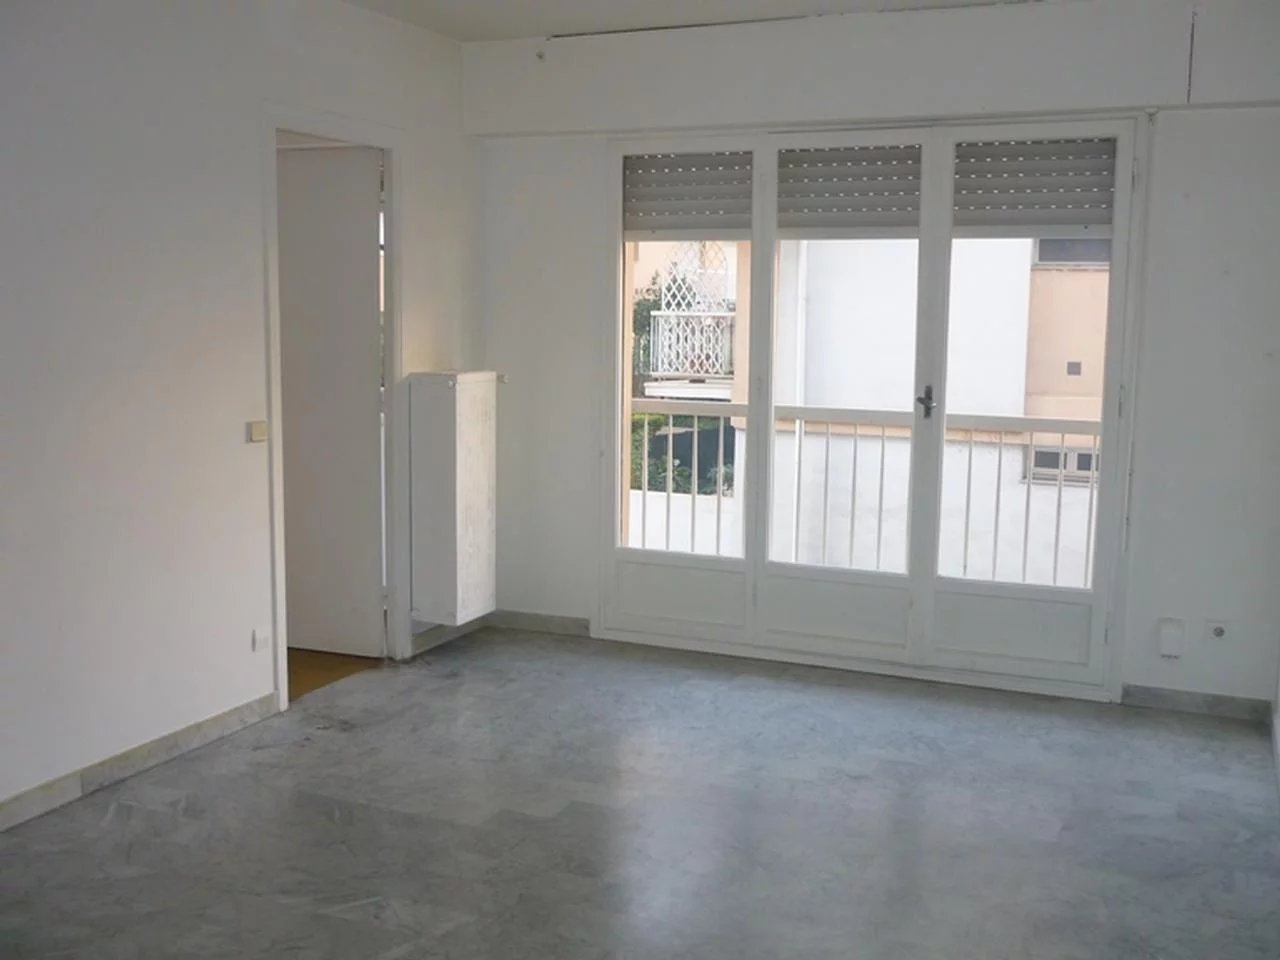 Appartement  1 Locali 27.64m2  In vendita   145 000 €